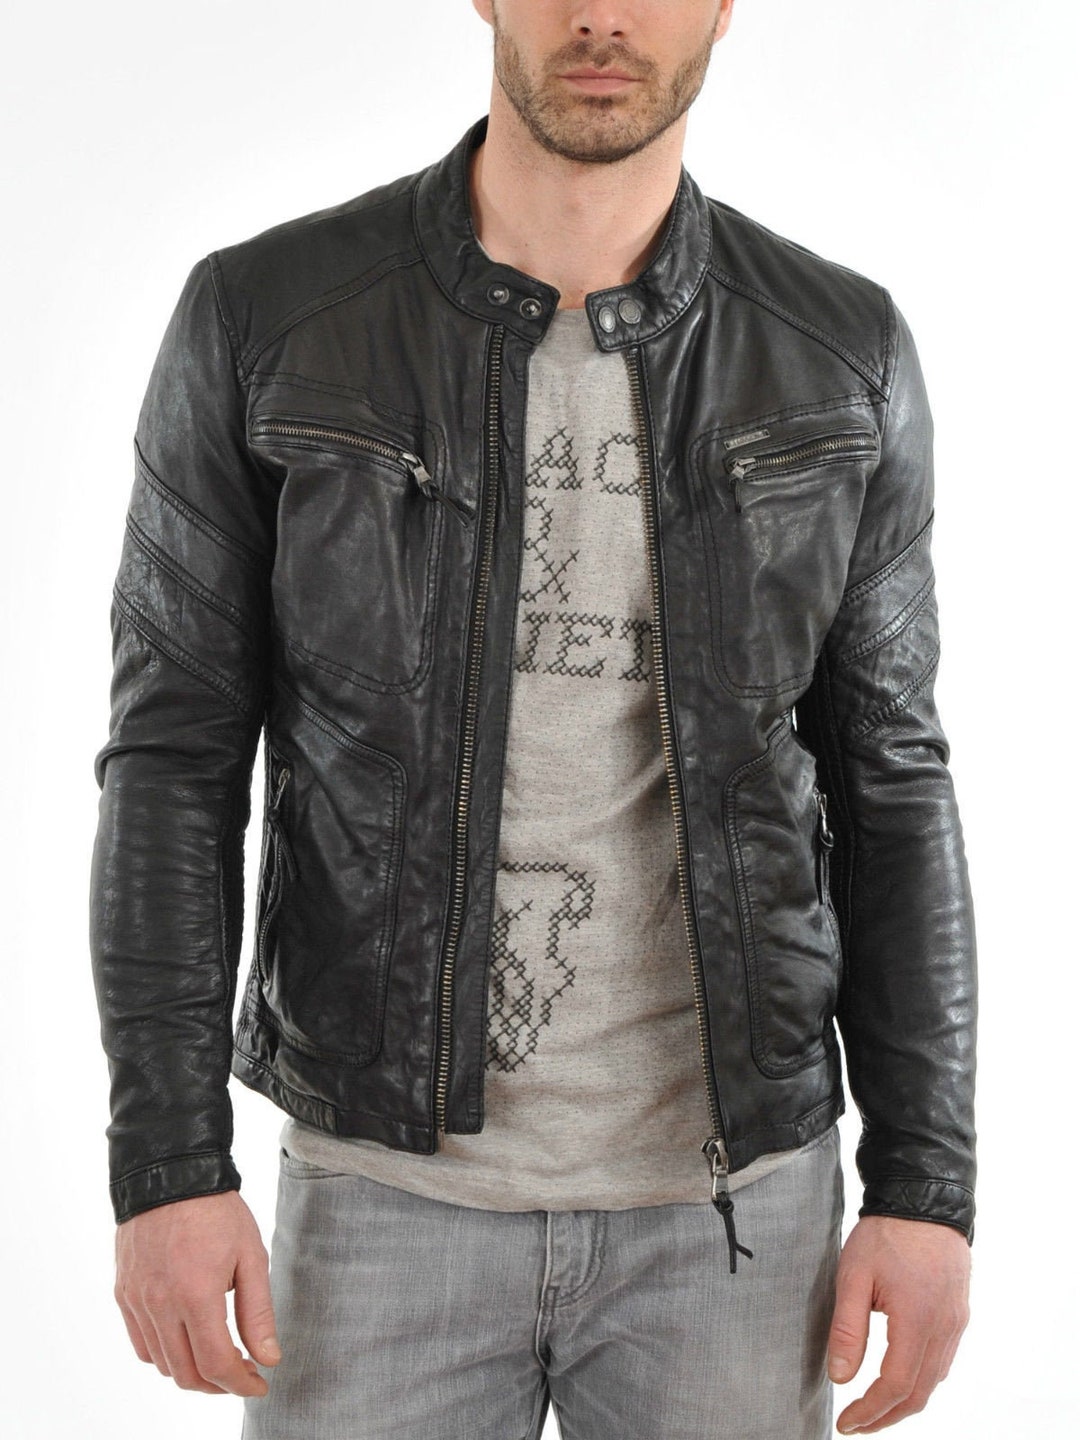 New Genuine Lambskin Leather Designer Jacket Motorcycle Biker Men's S M ...